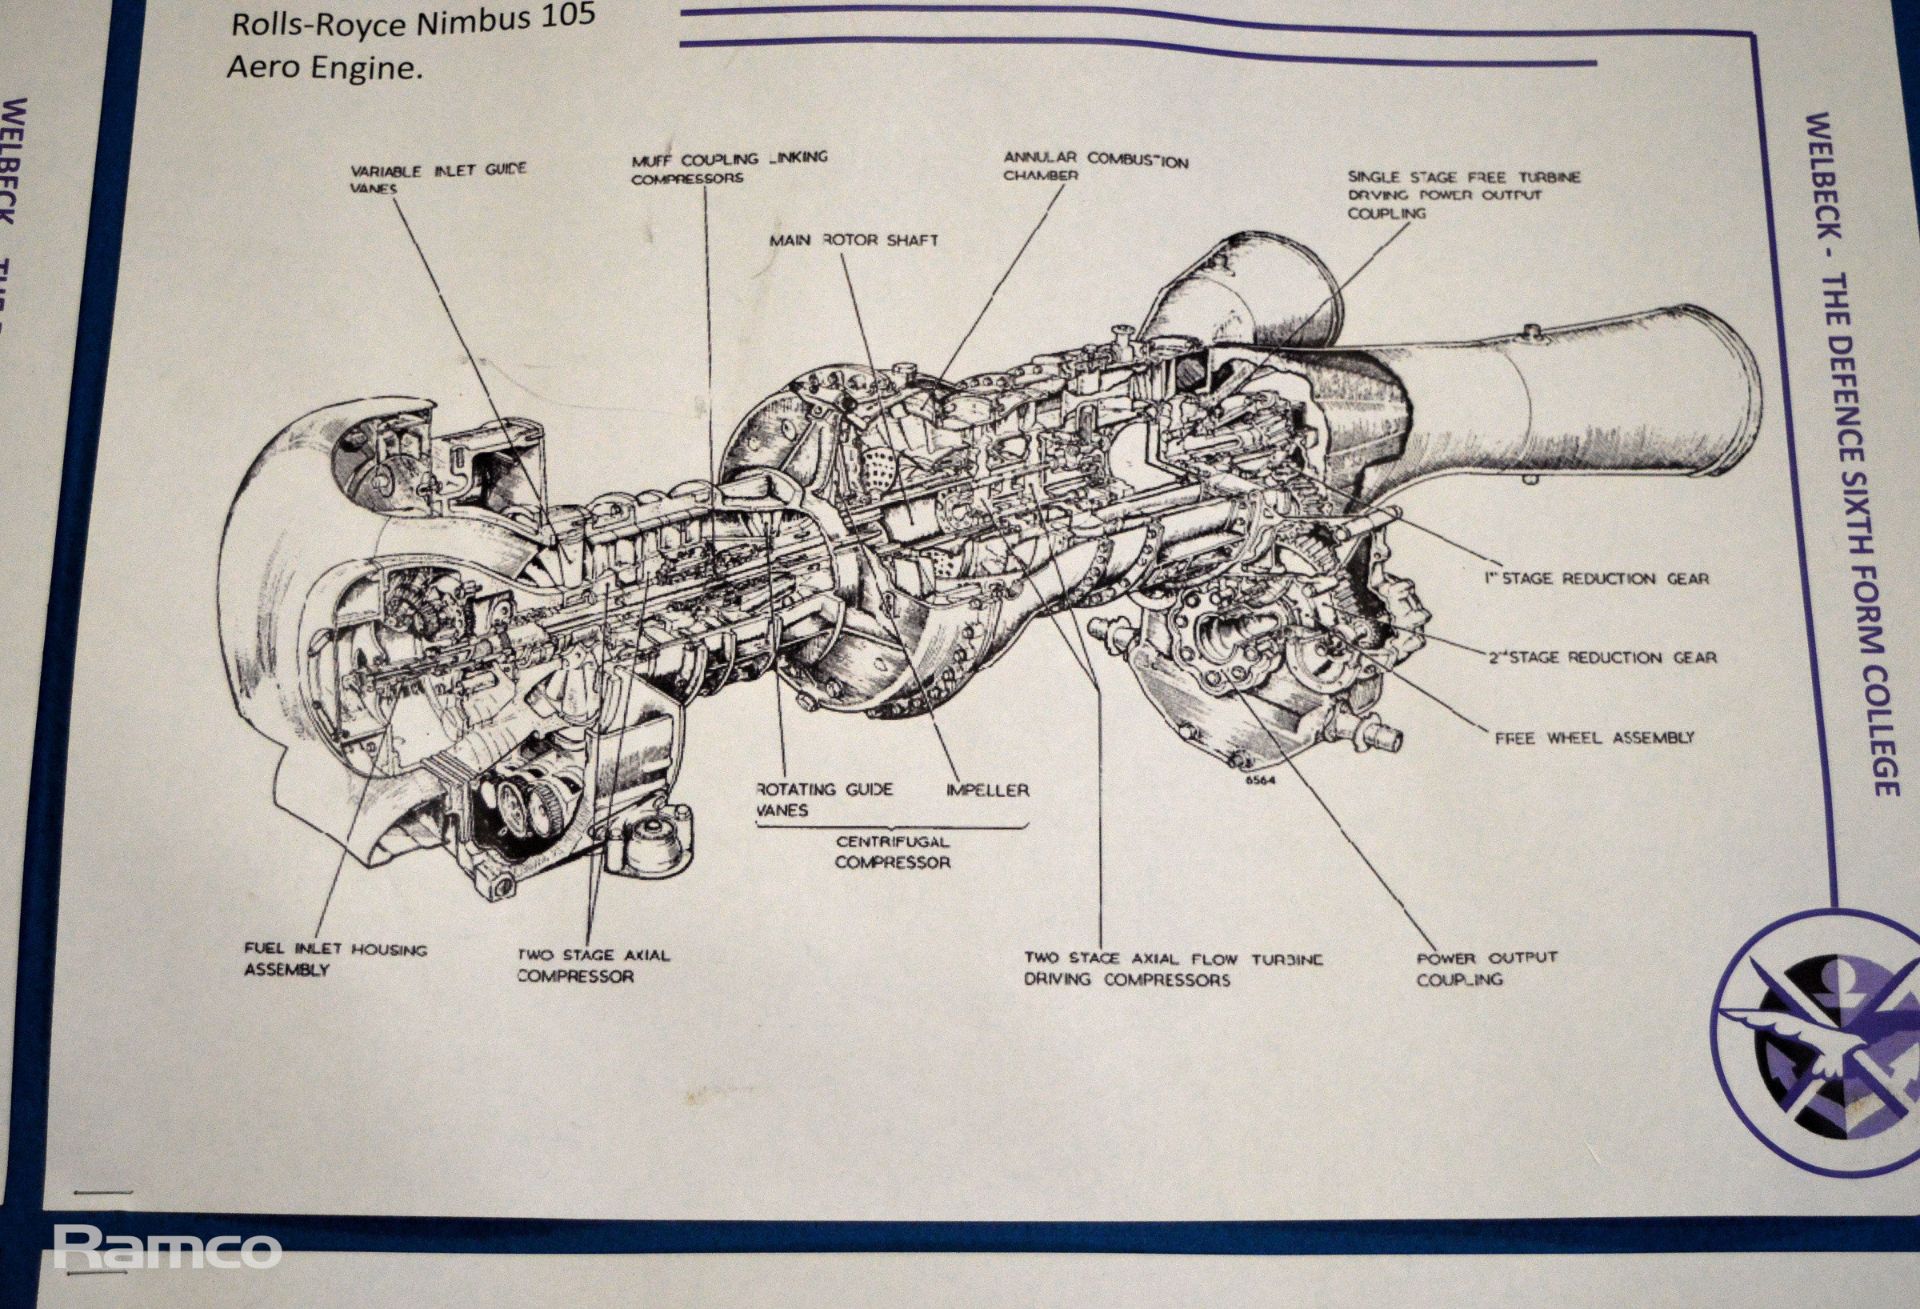 Rolls Royce Nimbus 105 Aero Jet Engine - Nimbus ECU - mark 1050 - serial 15255 - Image 13 of 15